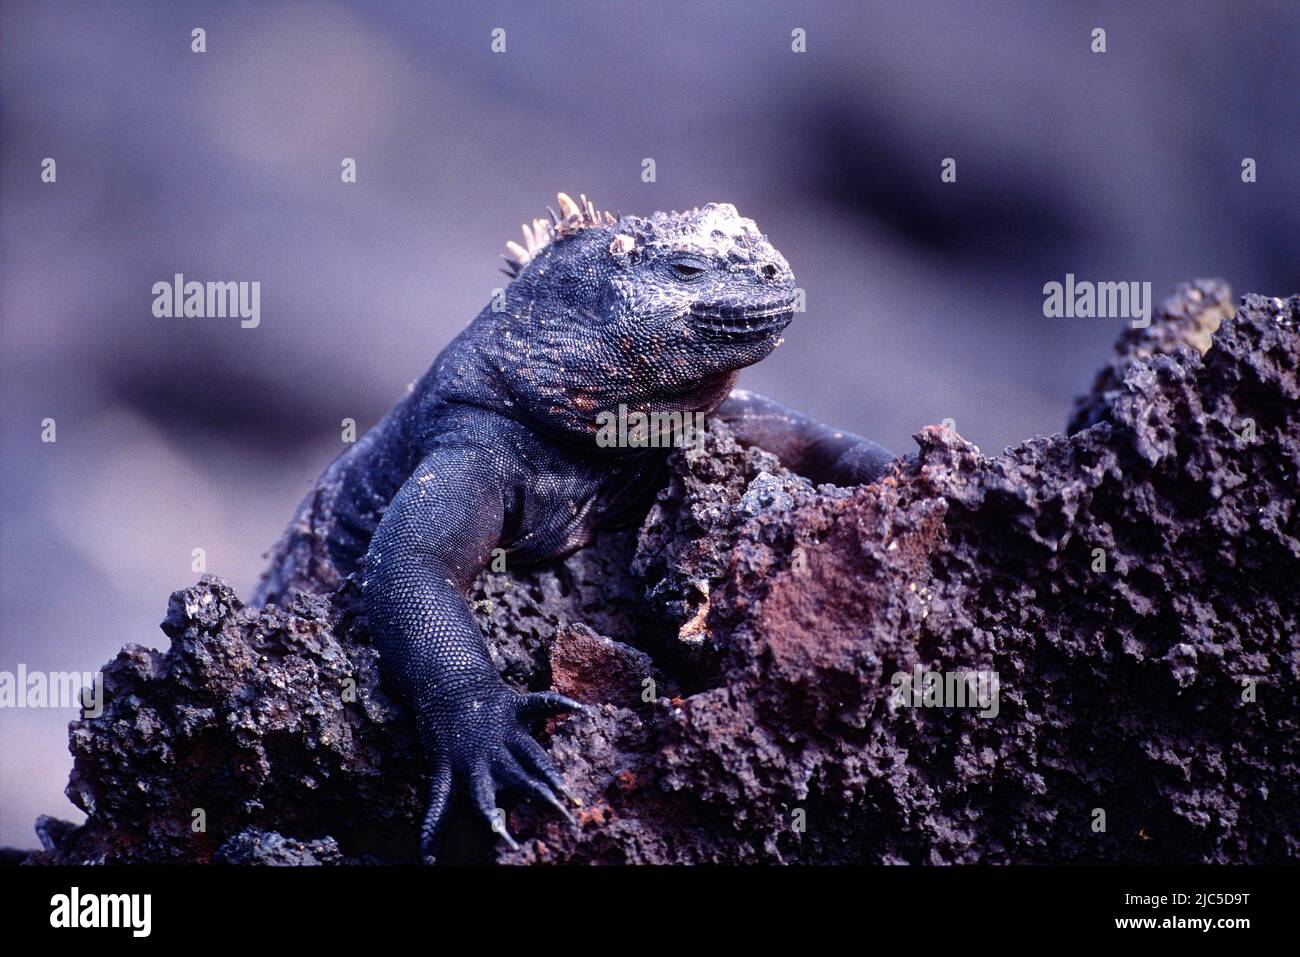 Meerechse, Amblyrhynchus cristatus, Iguanidae, Reptil, Tier auf Fels, Pta. Espinosa, Fernandina, Galapagos Stock Photo